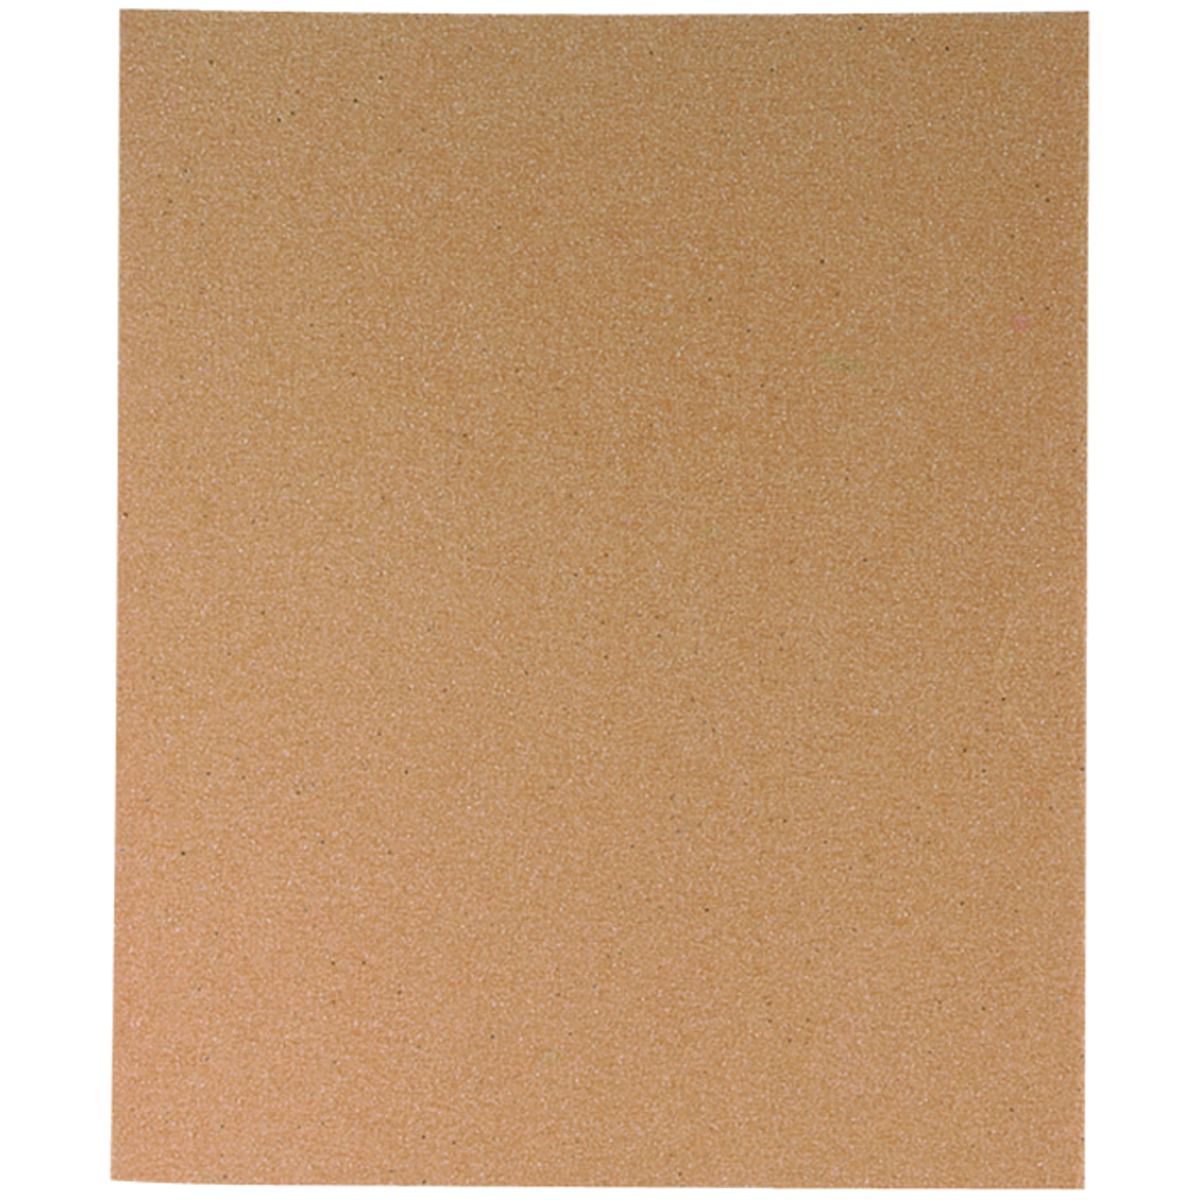 Image of Wickes General Purpose Fine Sandpaper - Pack of 5